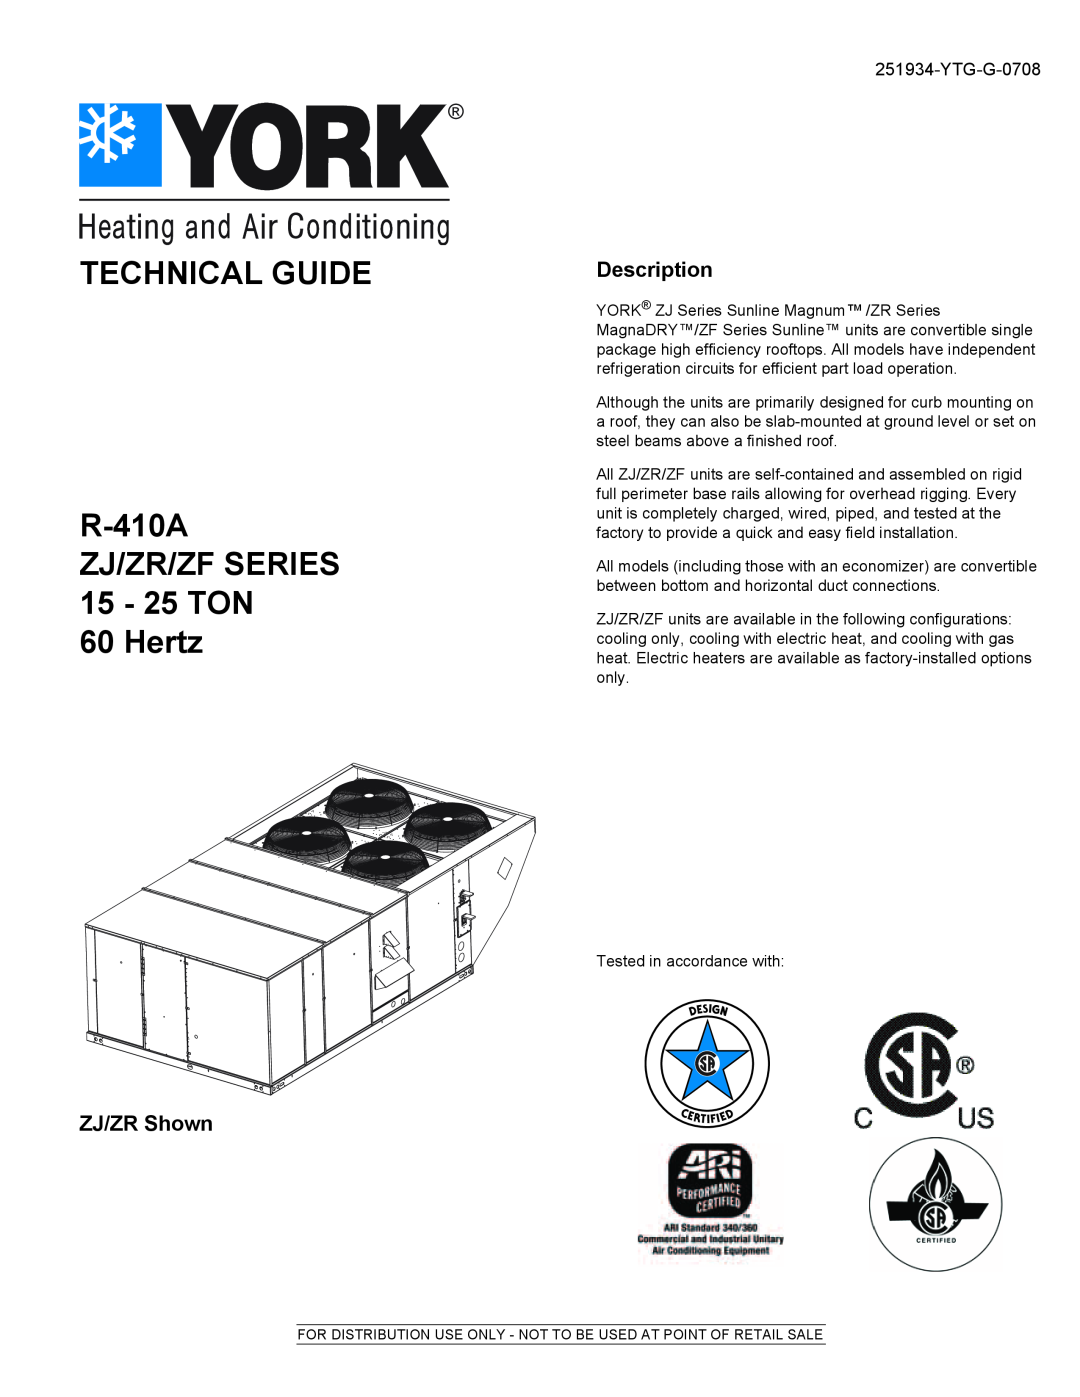 York manual ZJ/ZR Shown, Description, YTG-G-0708, TECHNICAL GUIDE R-410A, ZJ/ZR/ZF SERIES 15 - 25 TON 60 Hertz 